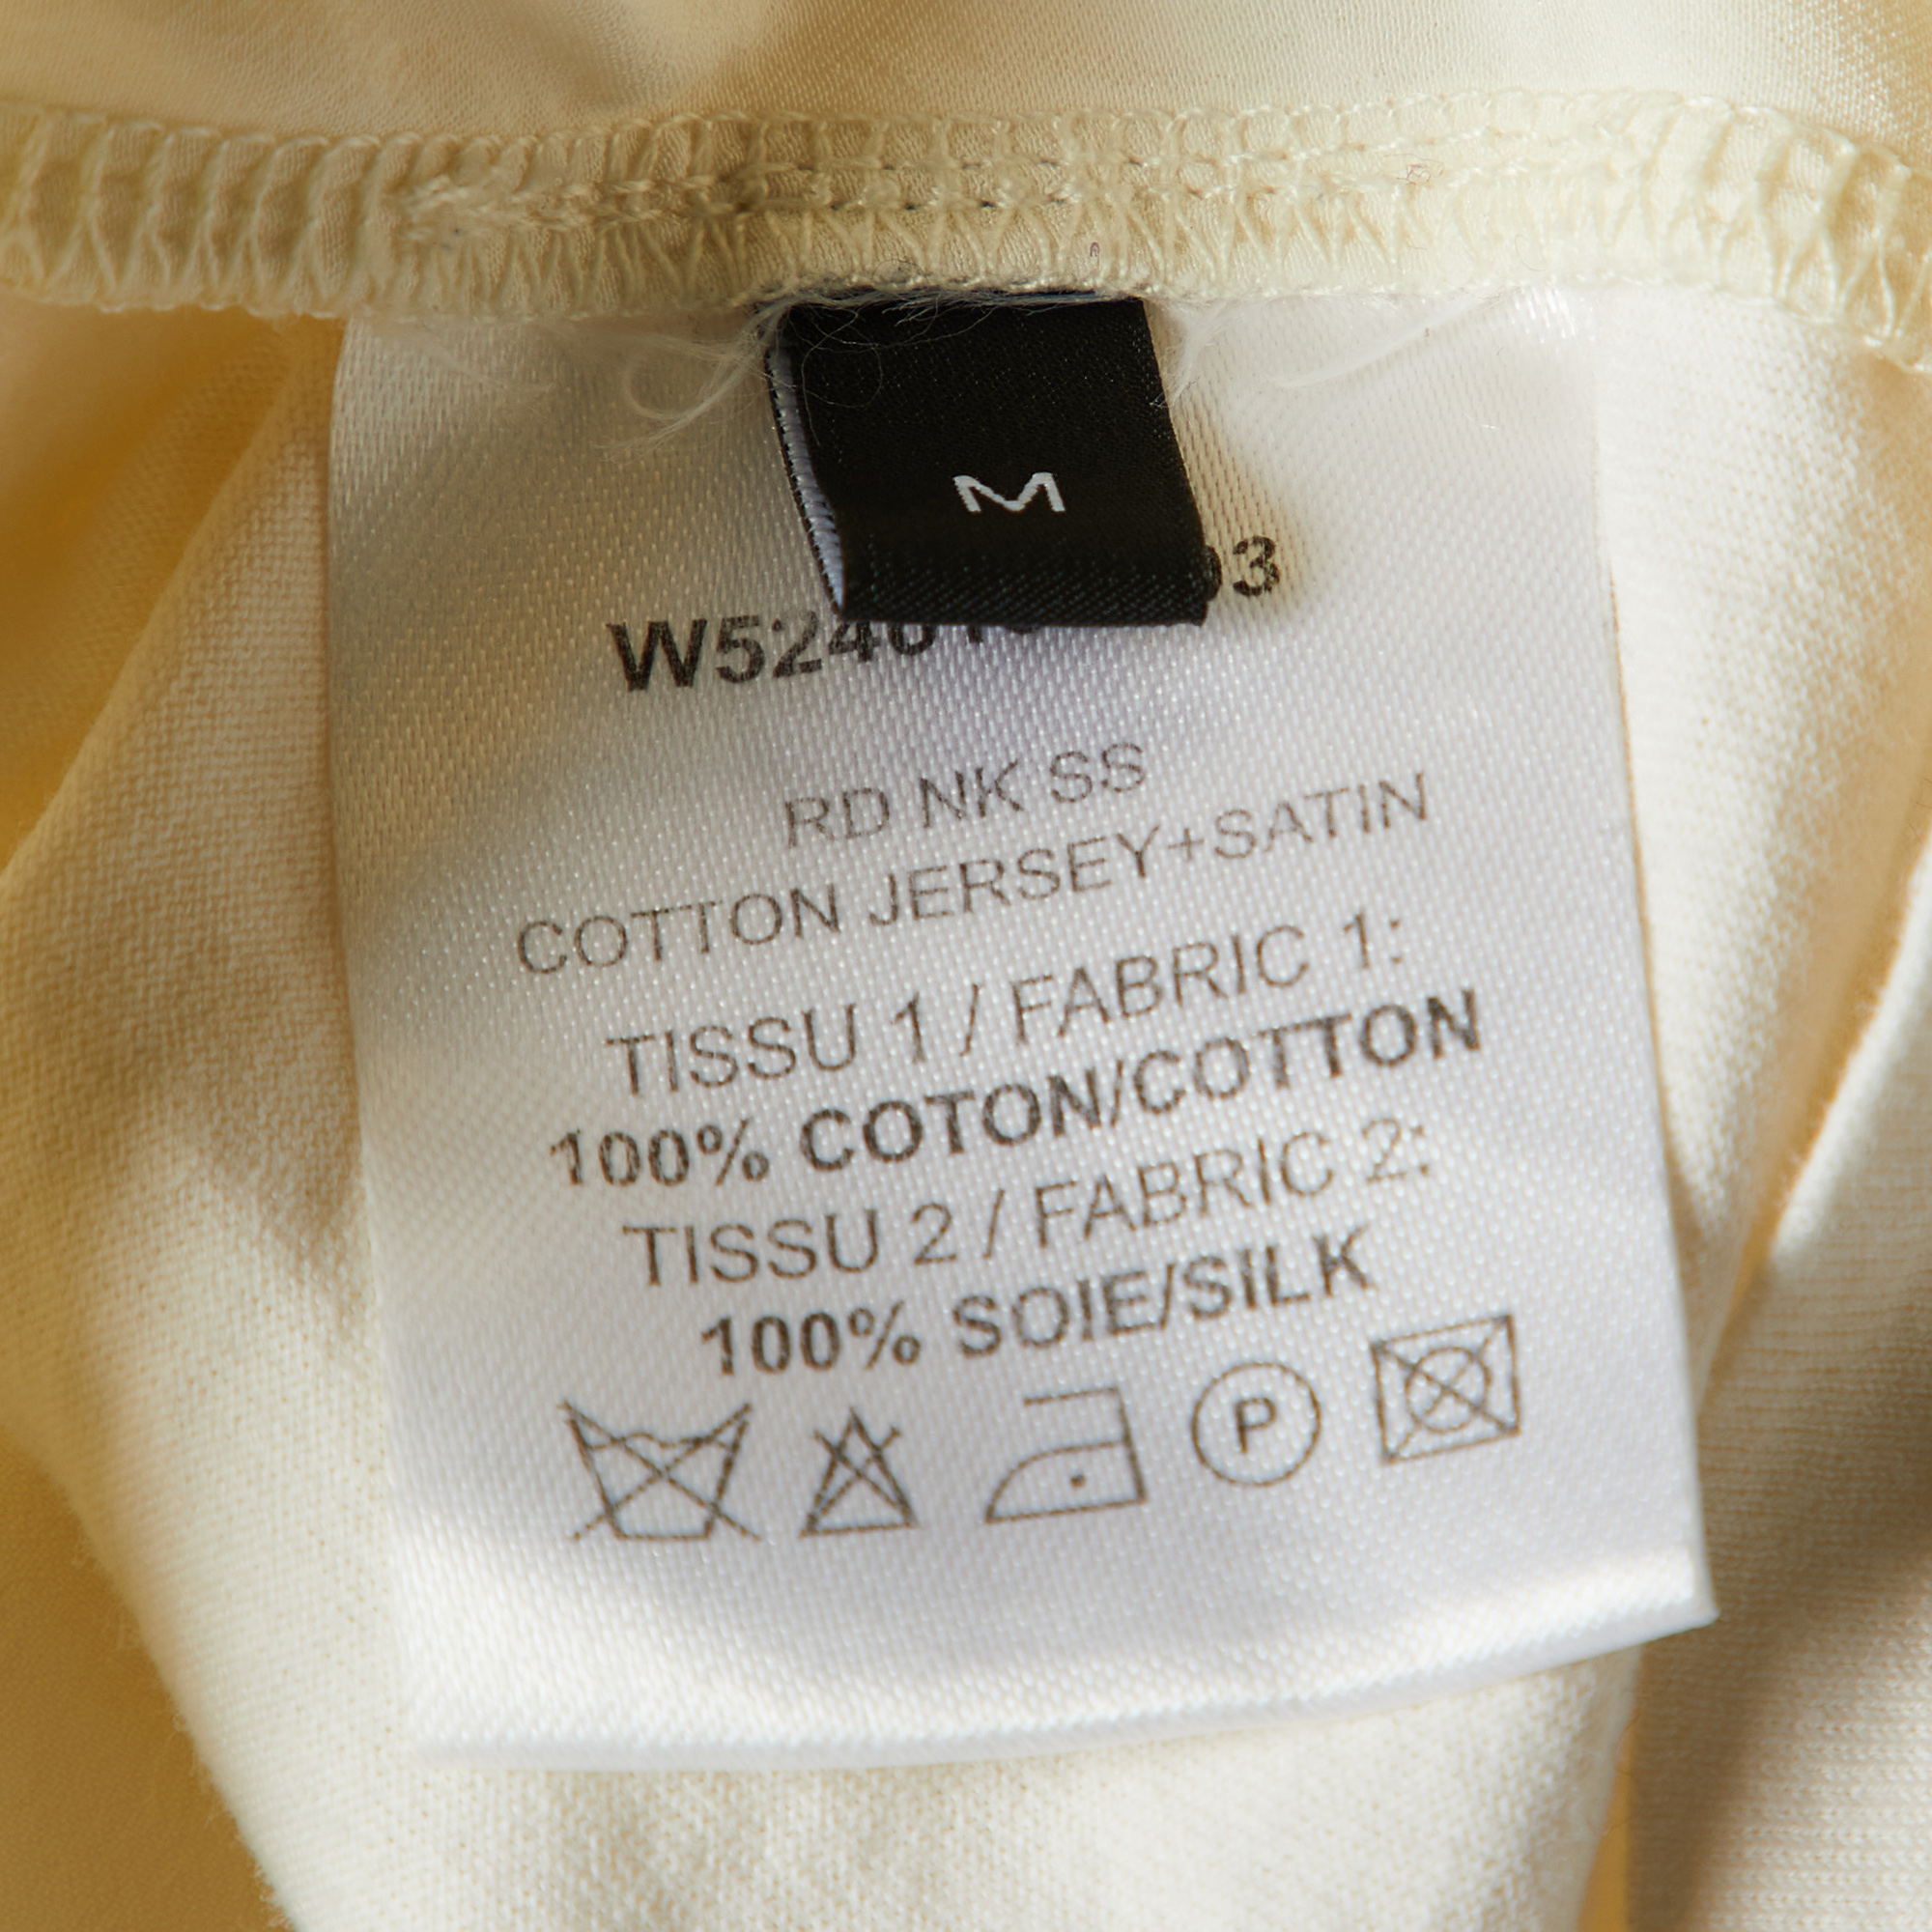 Joseph Off White Cotton Knit & Satin T-Shirt M